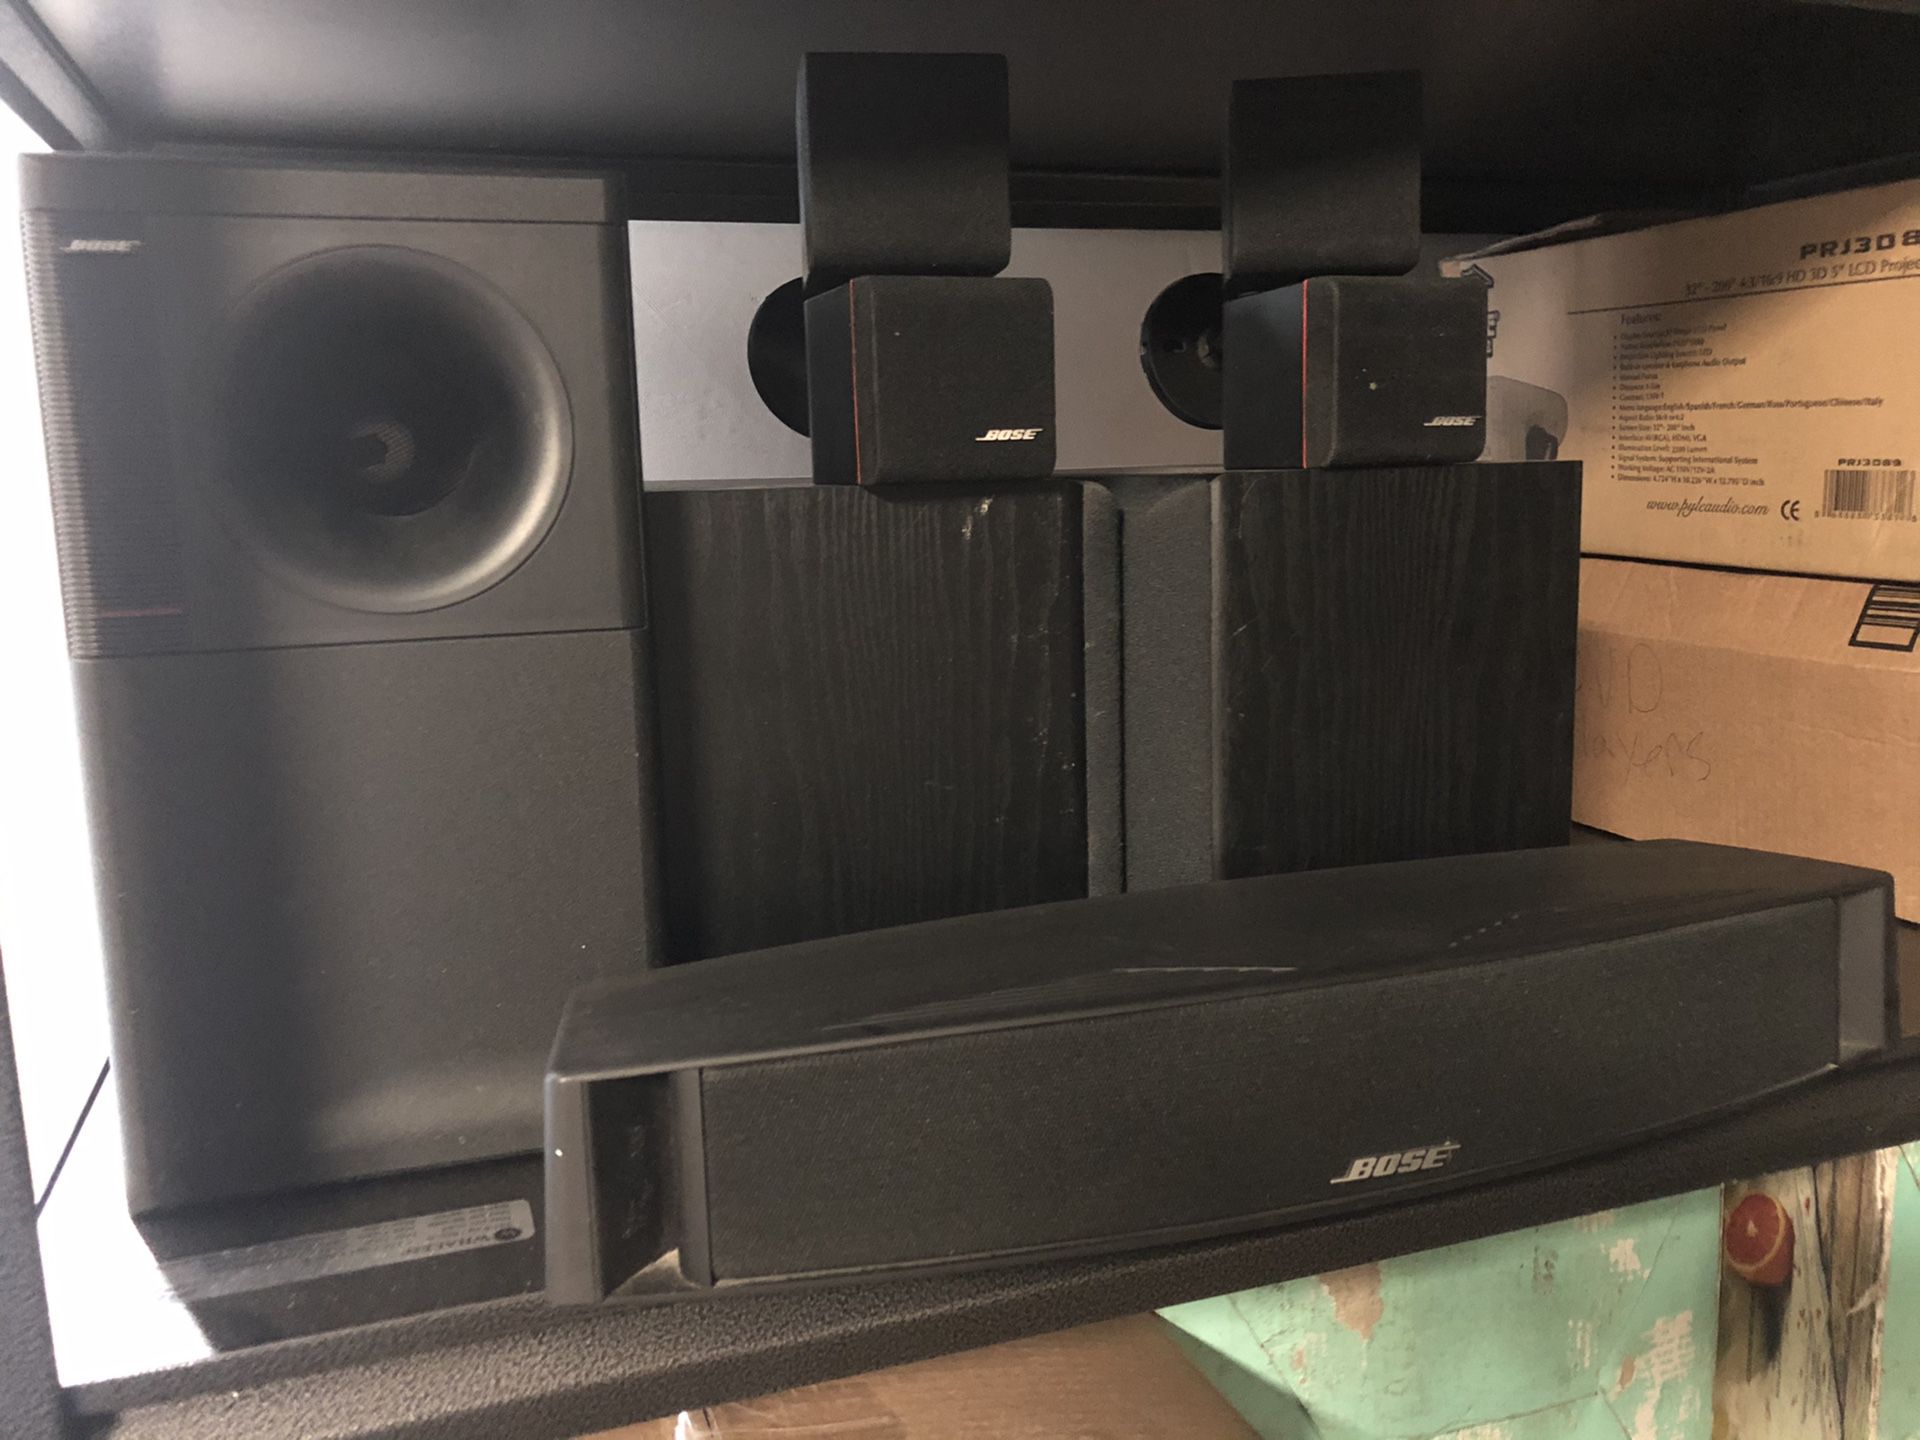 Bose Acoustimass 5 series 2 surround sound system